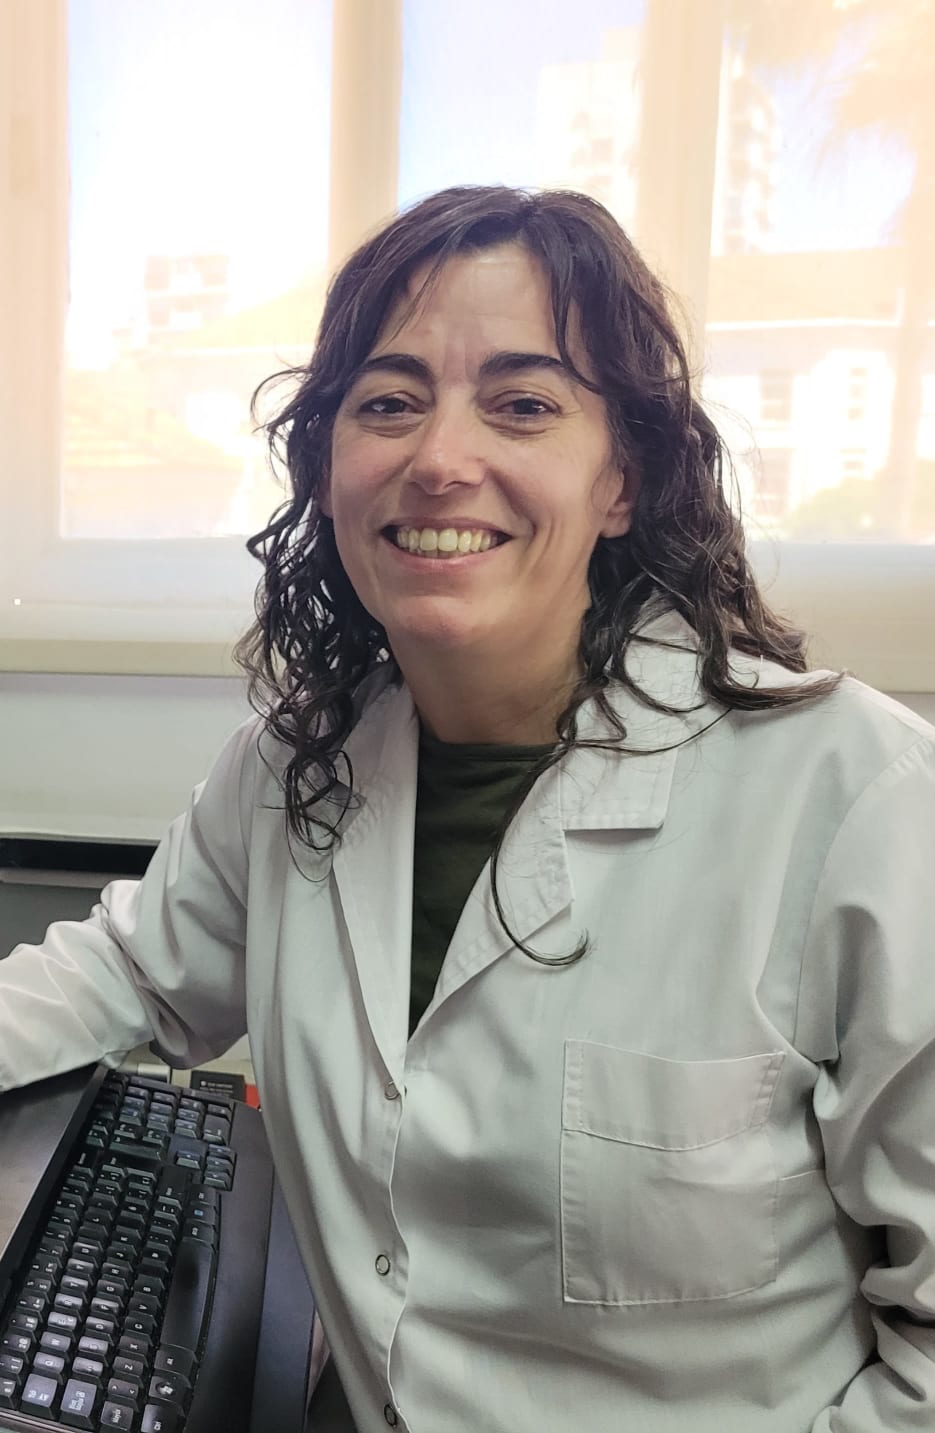 Smiling scientist in lab coat at keyboard